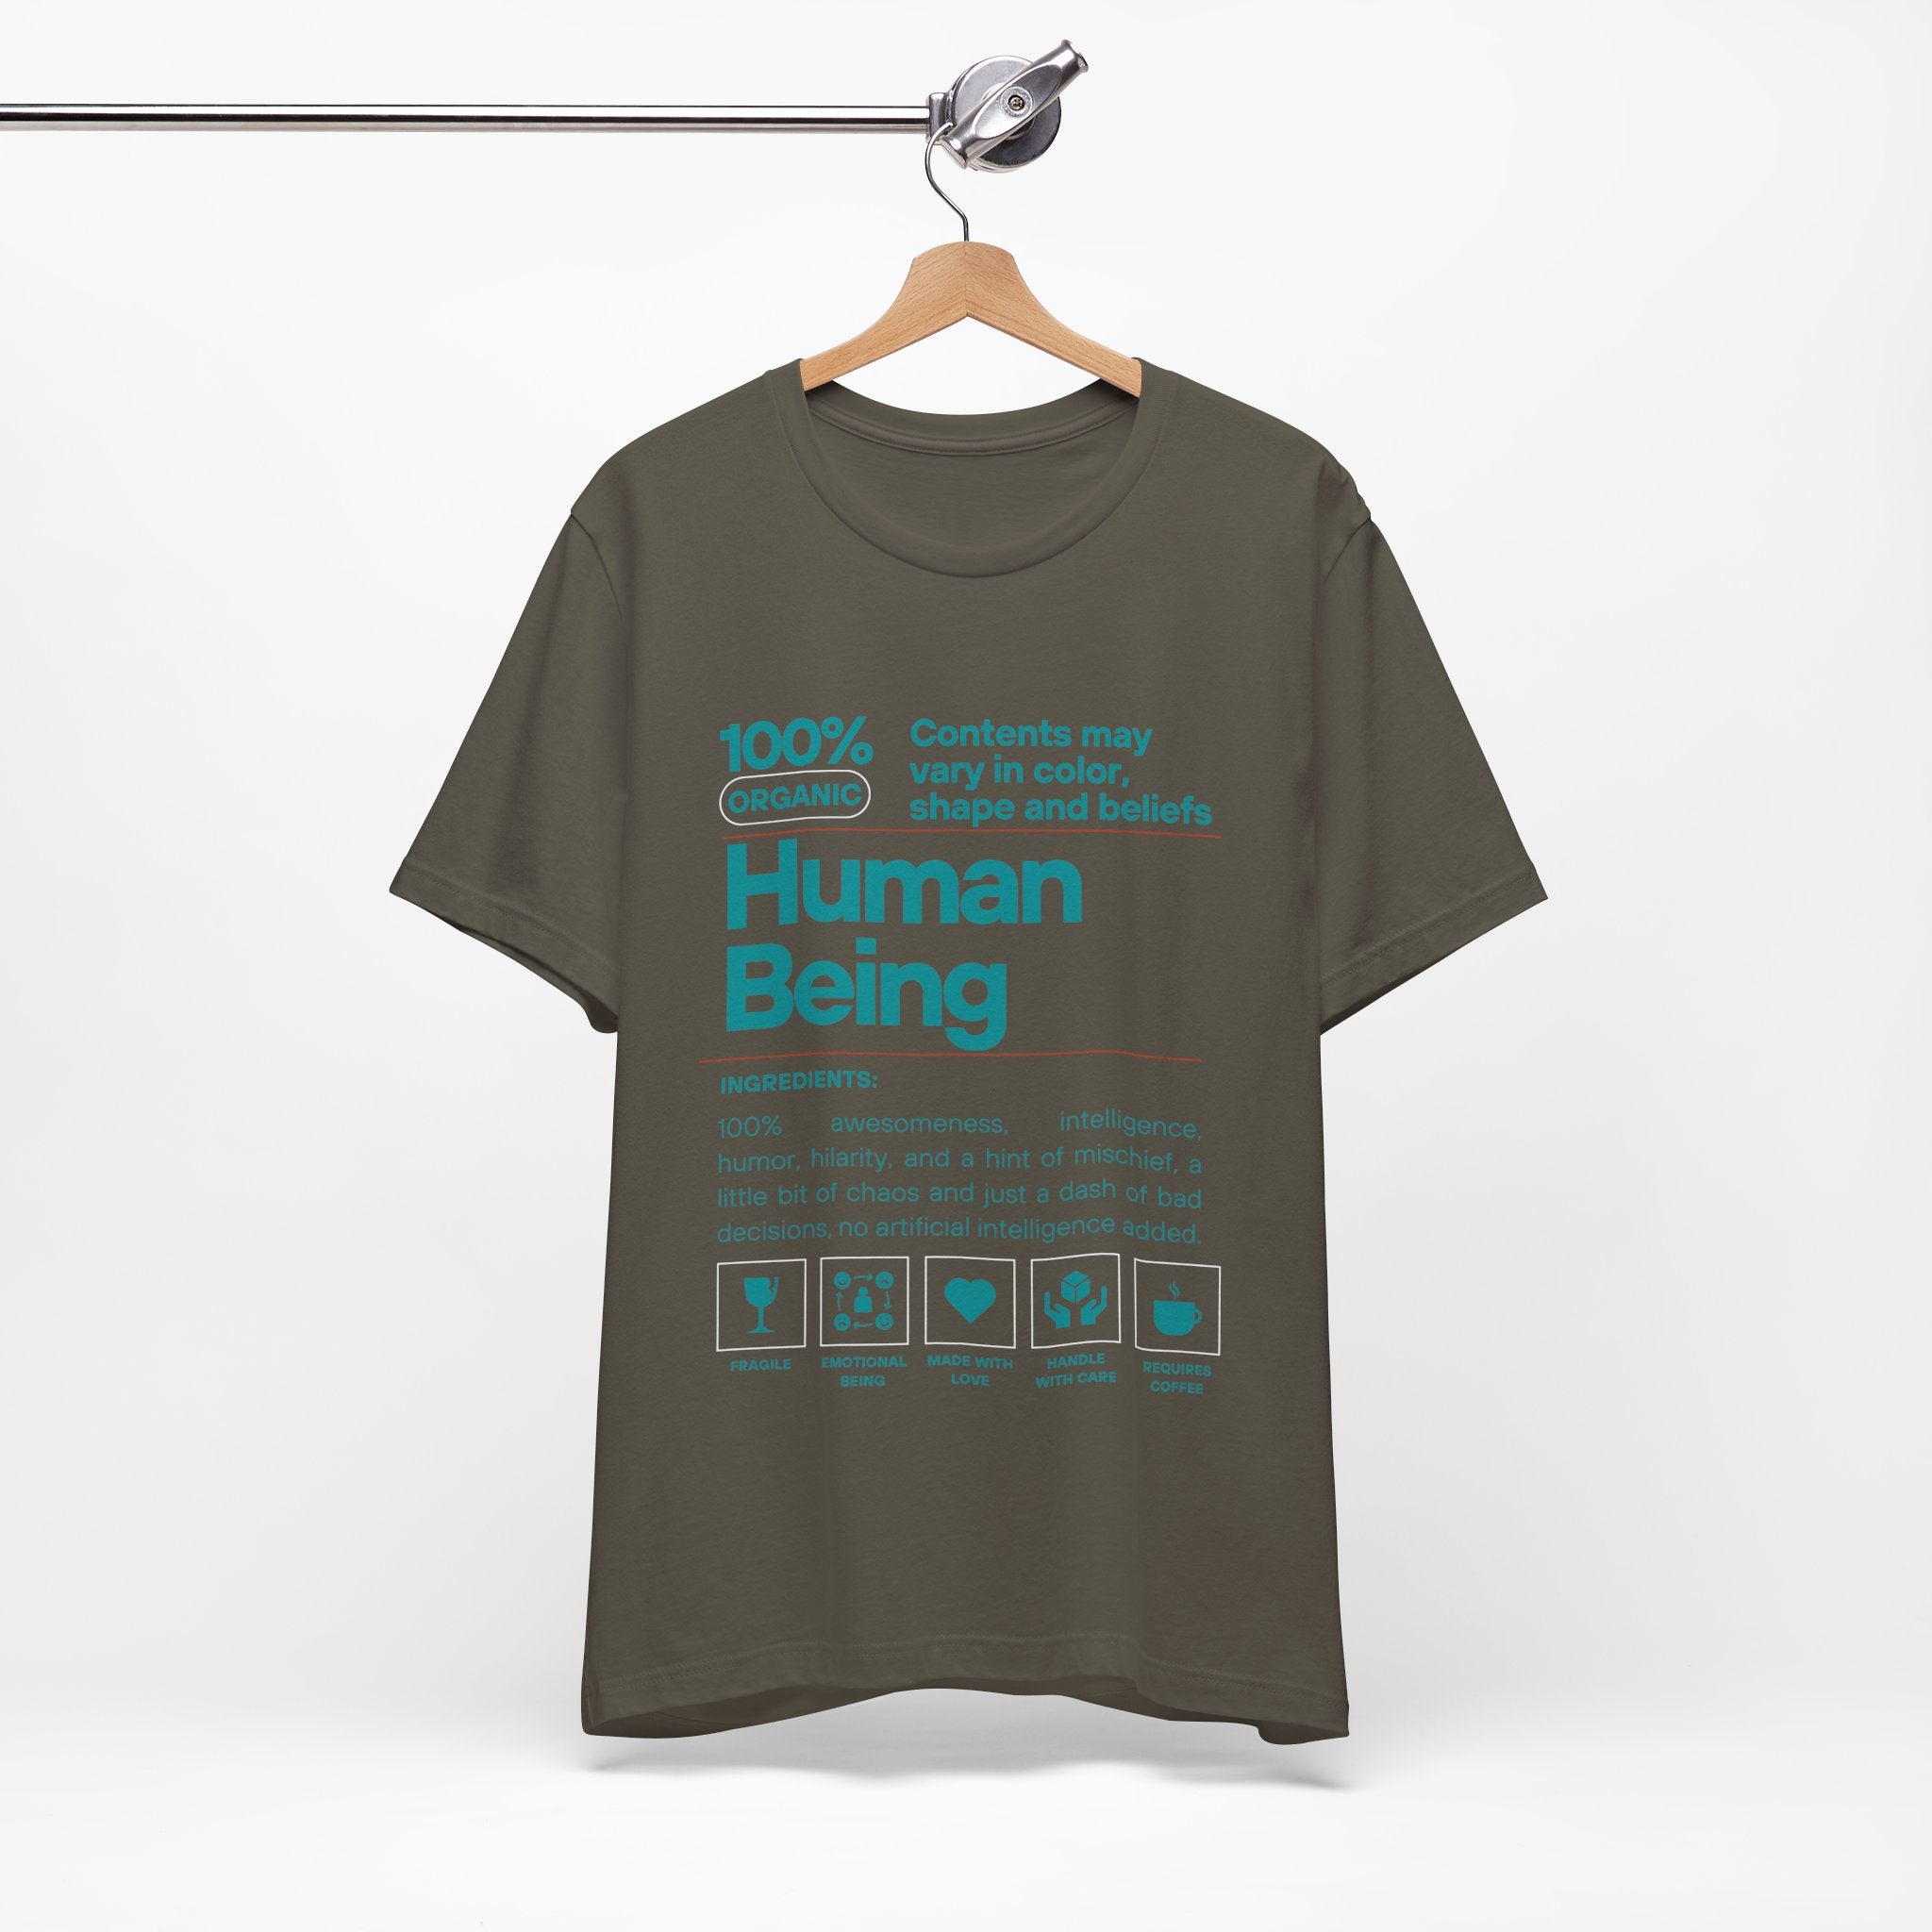 Being Human Tee Shirt